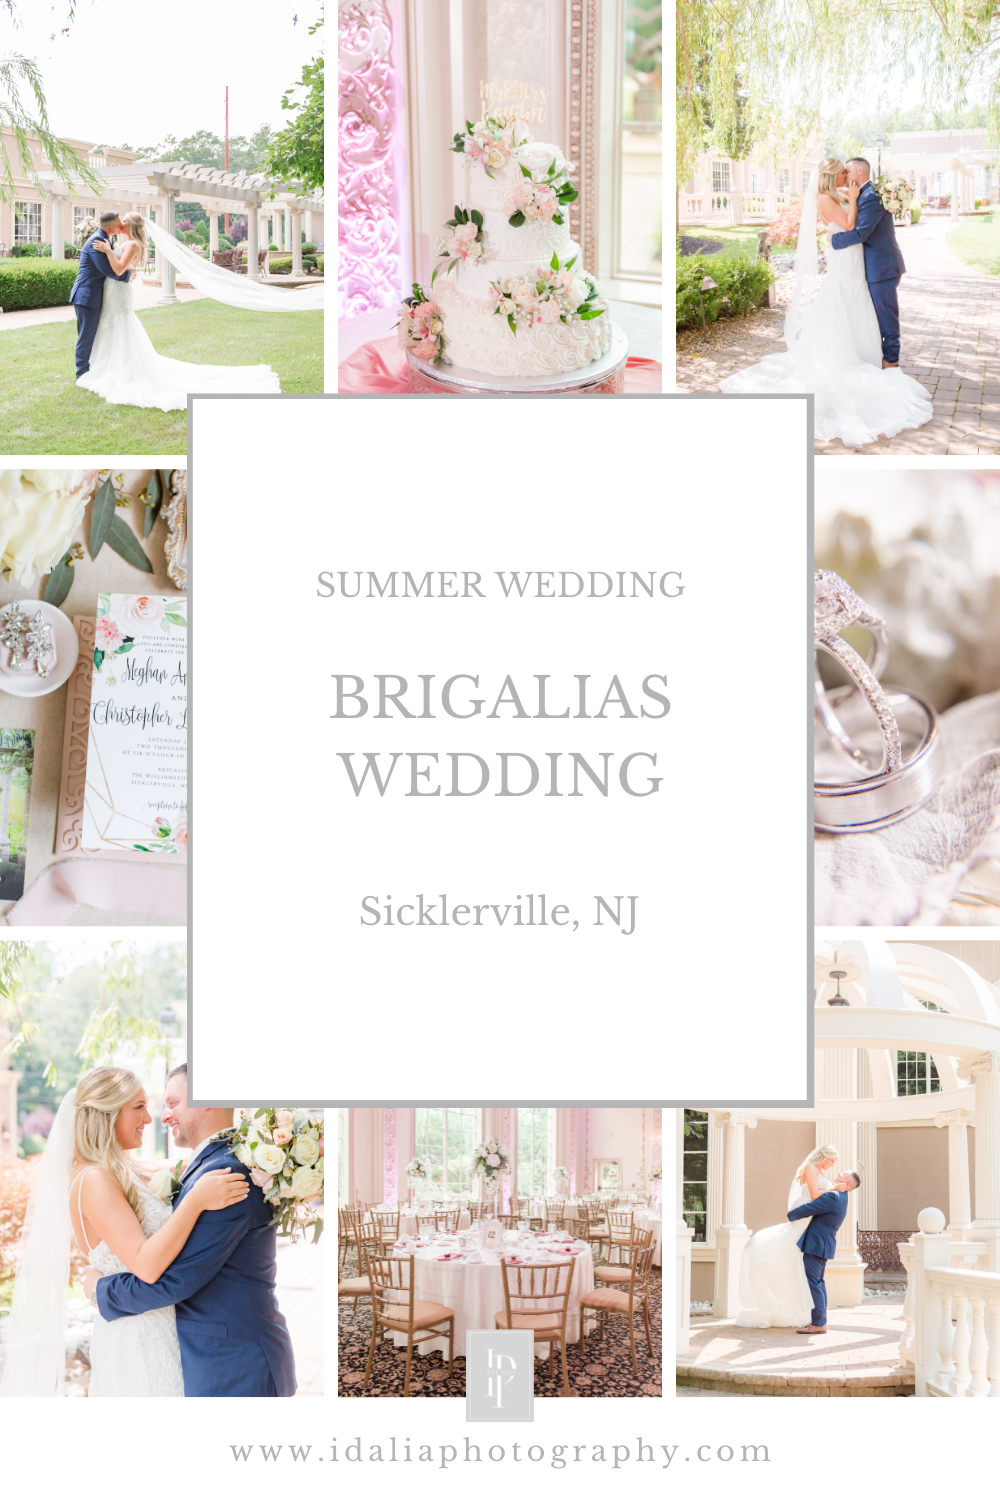 Brigalias wedding in Sicklerville NJ 